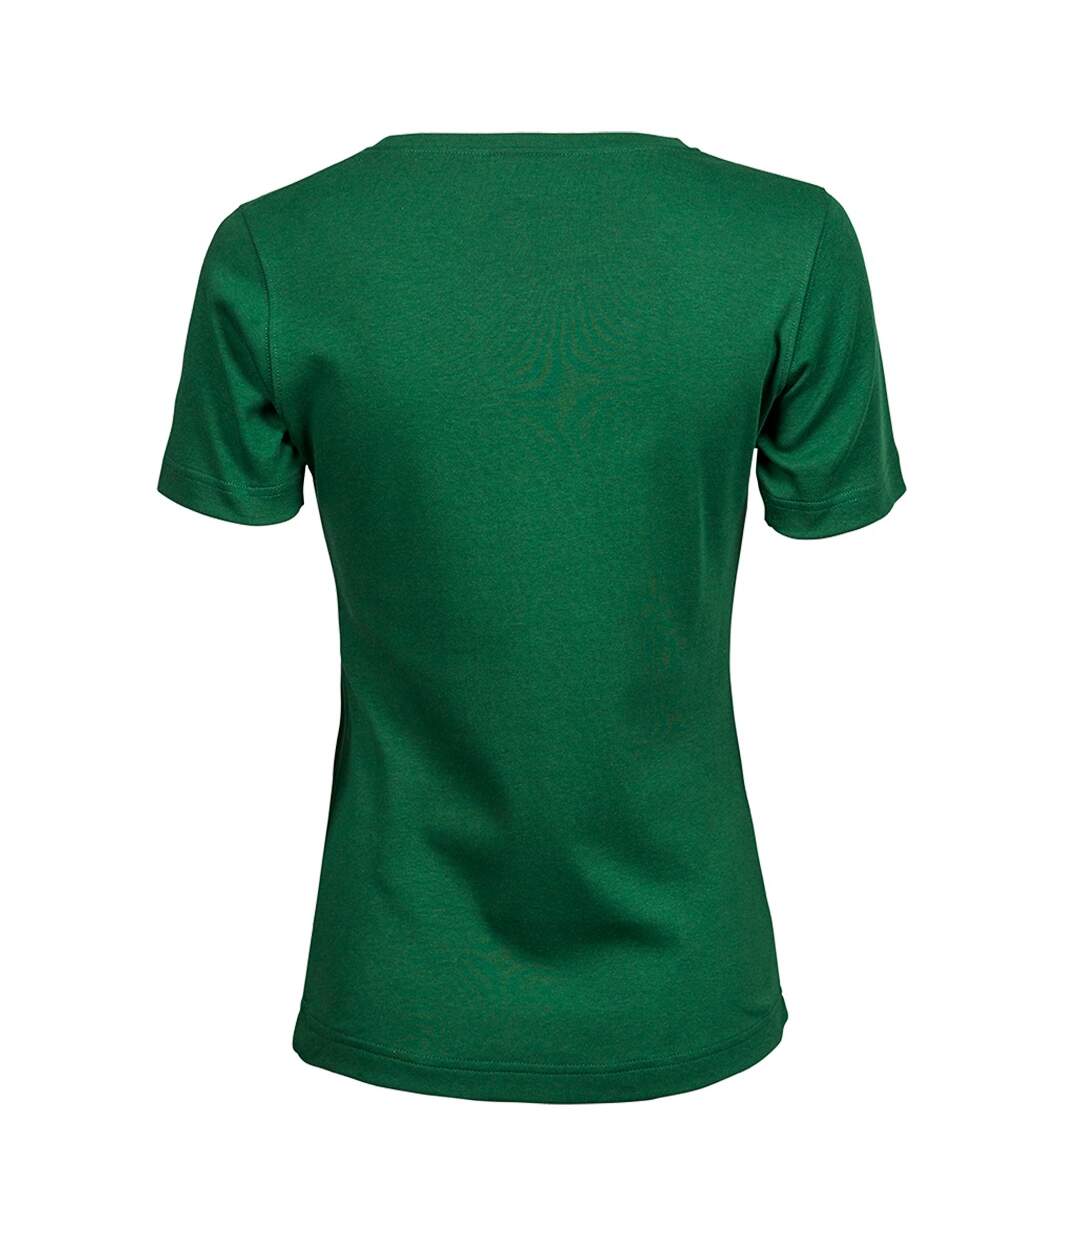 Tee Jays Ladies Interlock T-Shirt (Forest Green)